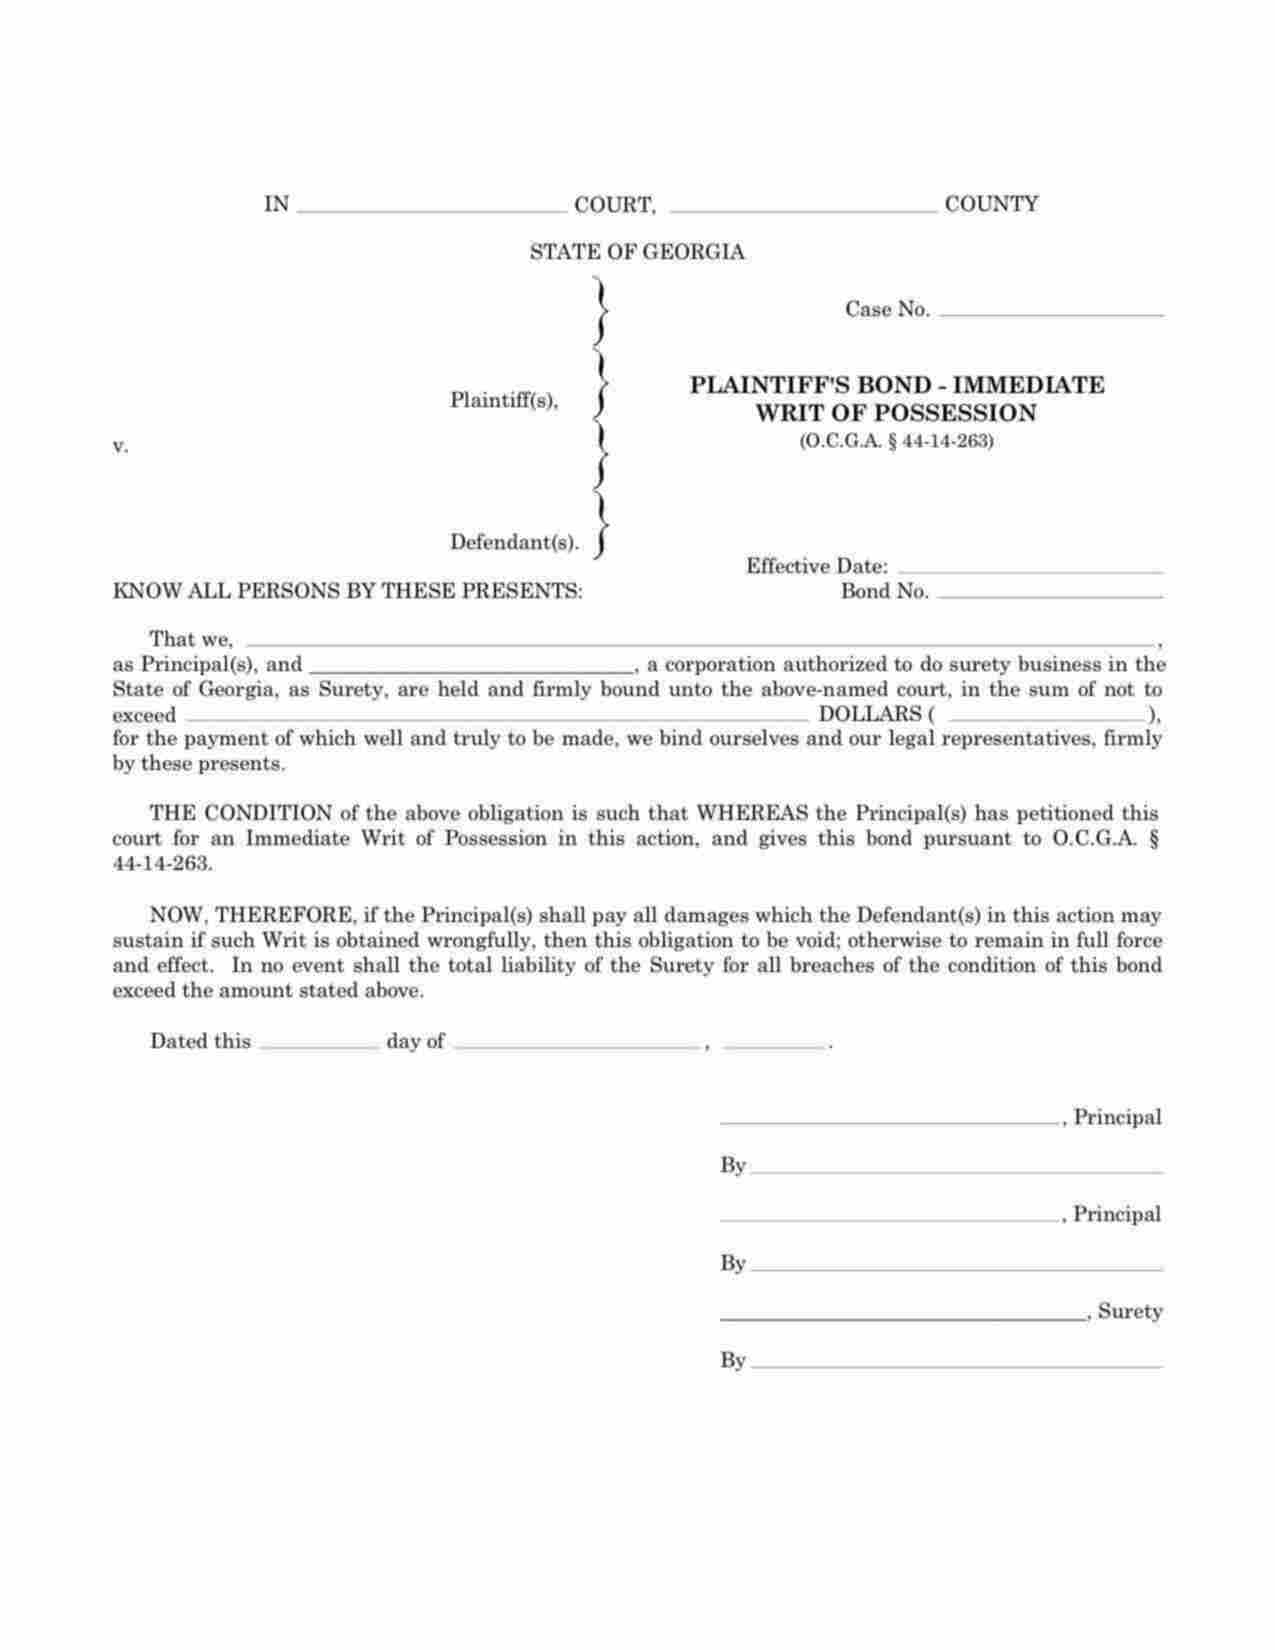 Georgia Plaintiffs Immediate Writ of Possession Bond Form